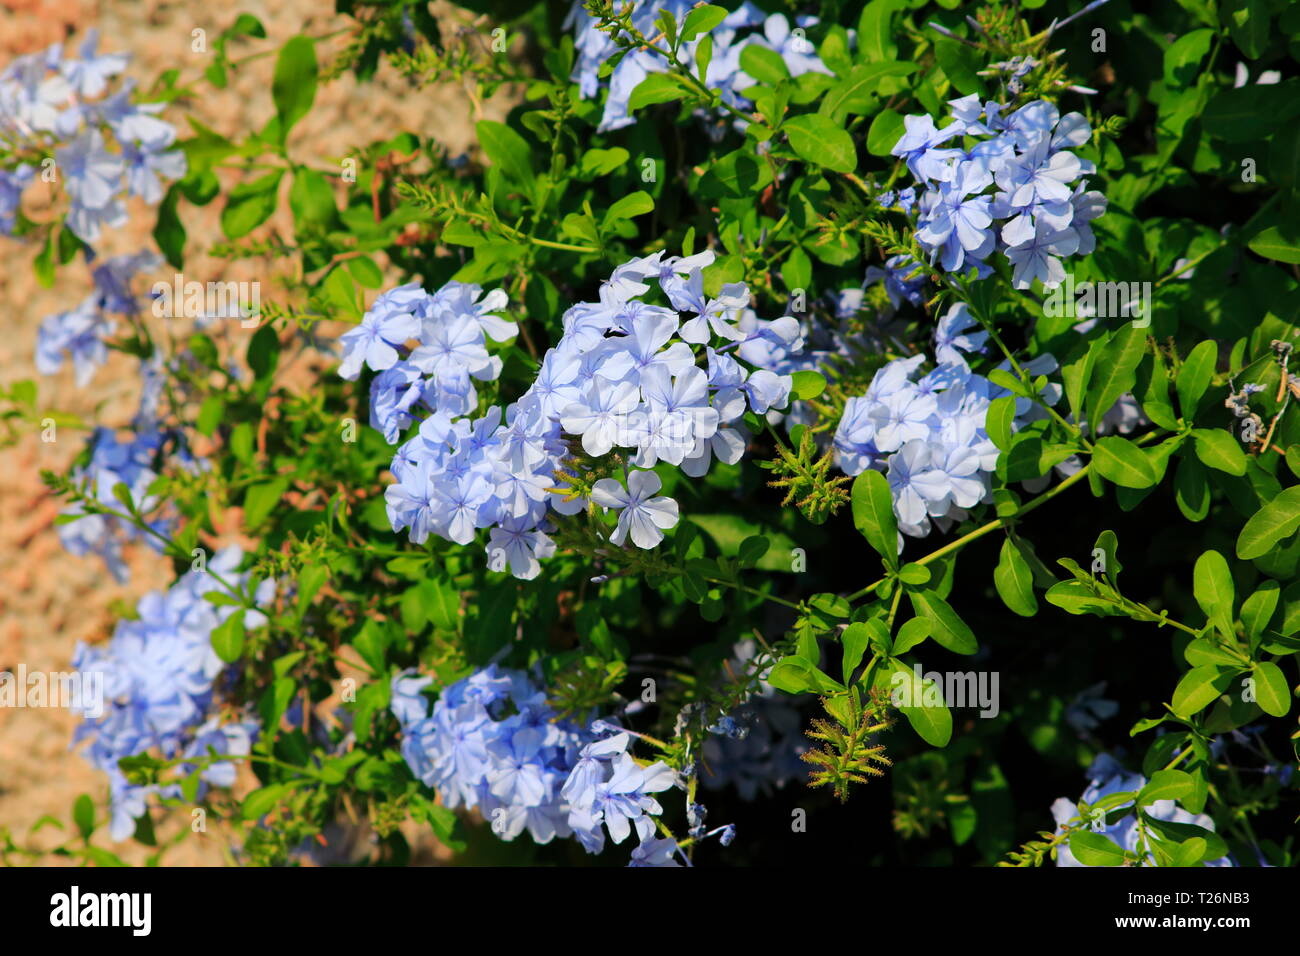 Phlox Staude, Flammenblume, Blüten in einem zarten Blau, lila, im Garten Foto Stock